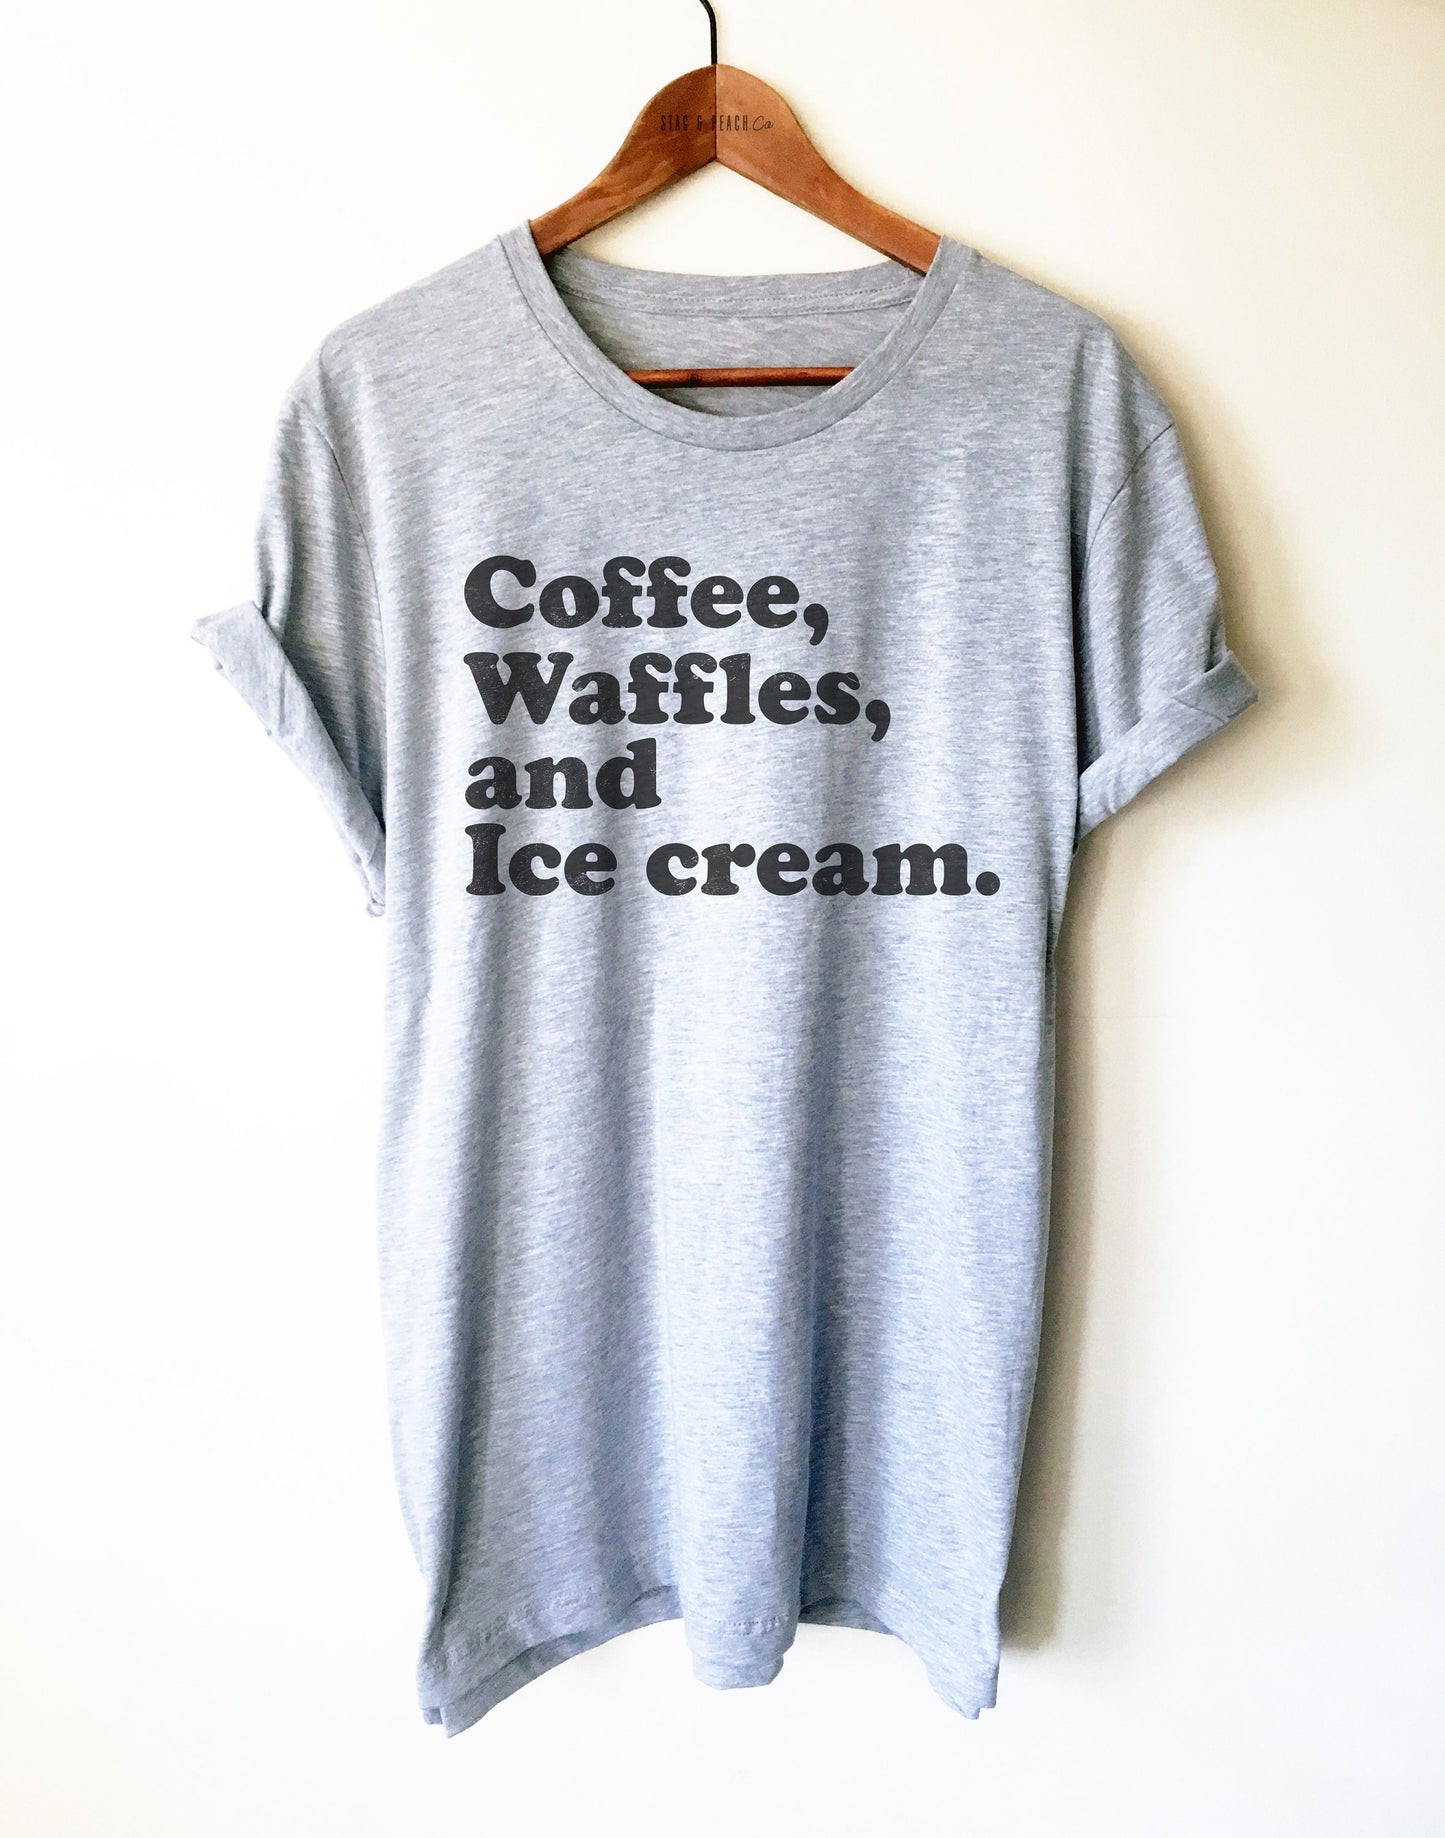 Coffee, Waffles and Ice cream Unisex Shirt -Weekends Are For Waffles, I Love Waffles, Caffeine-Addict, Foodie Gift, Belgium Shirt, Sweet Tee